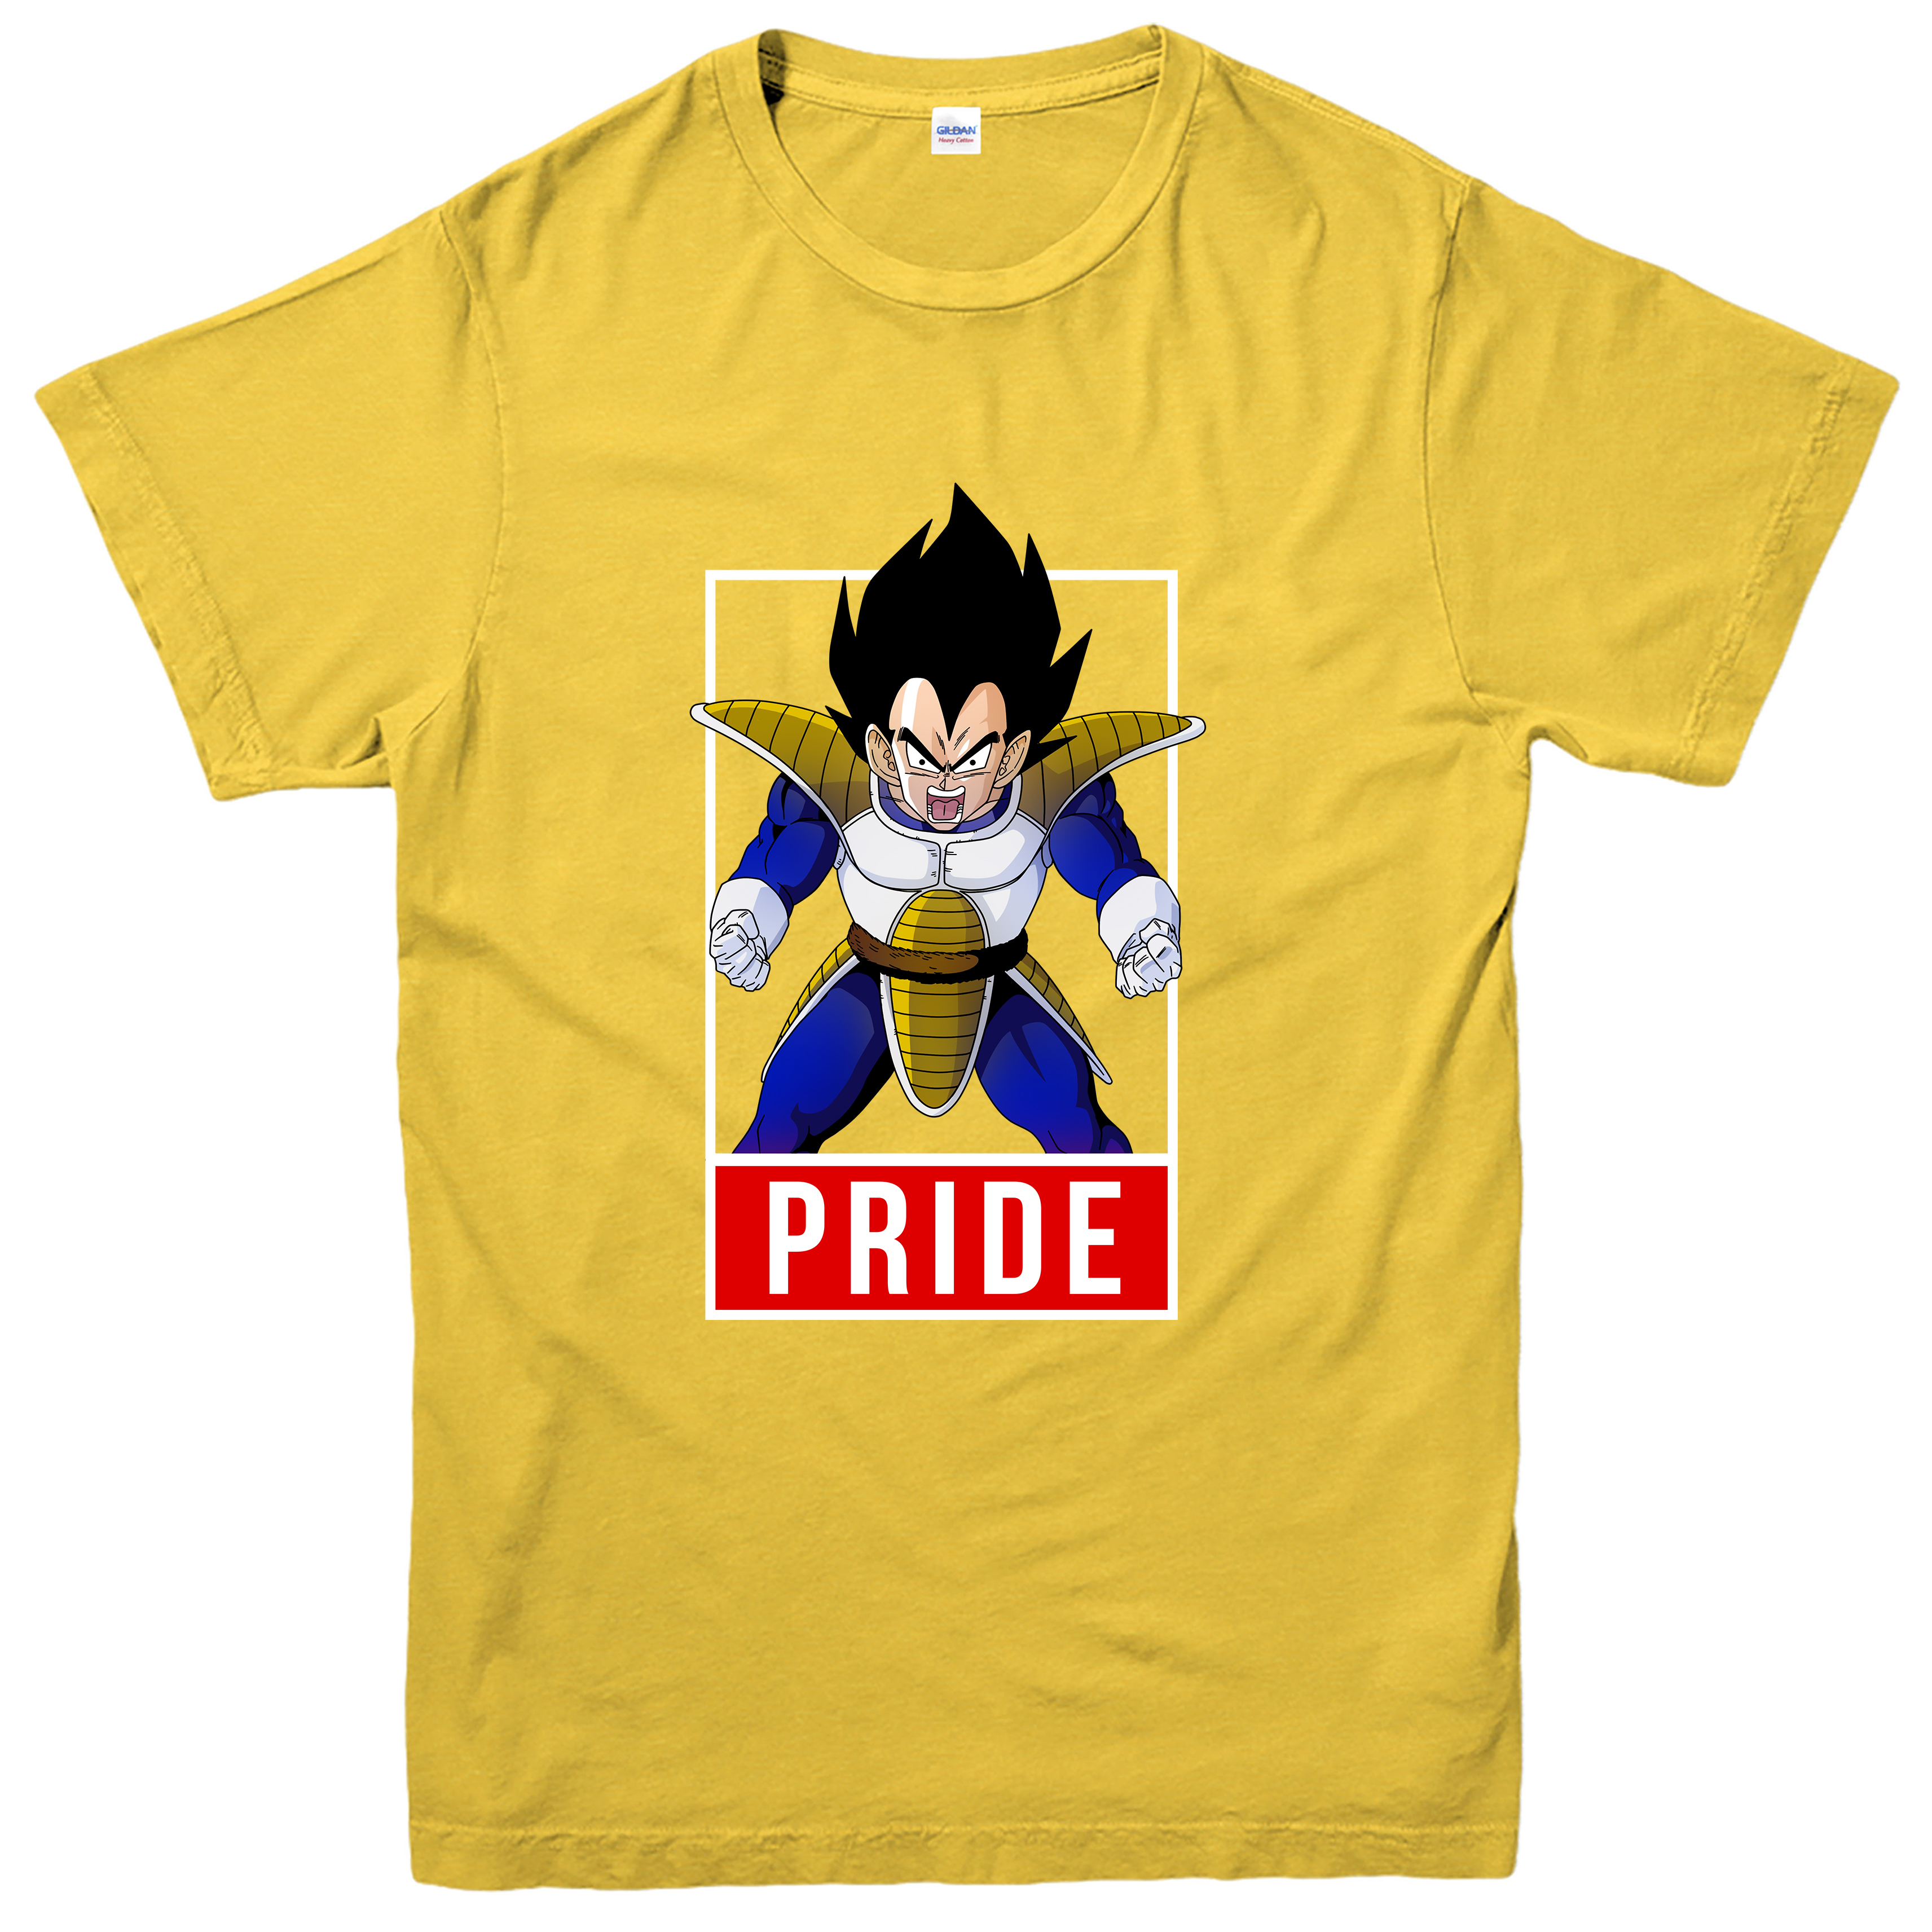 Vegeta Pride T-shirt, Dragon Ball Z Festive Design Tee Top | eBay